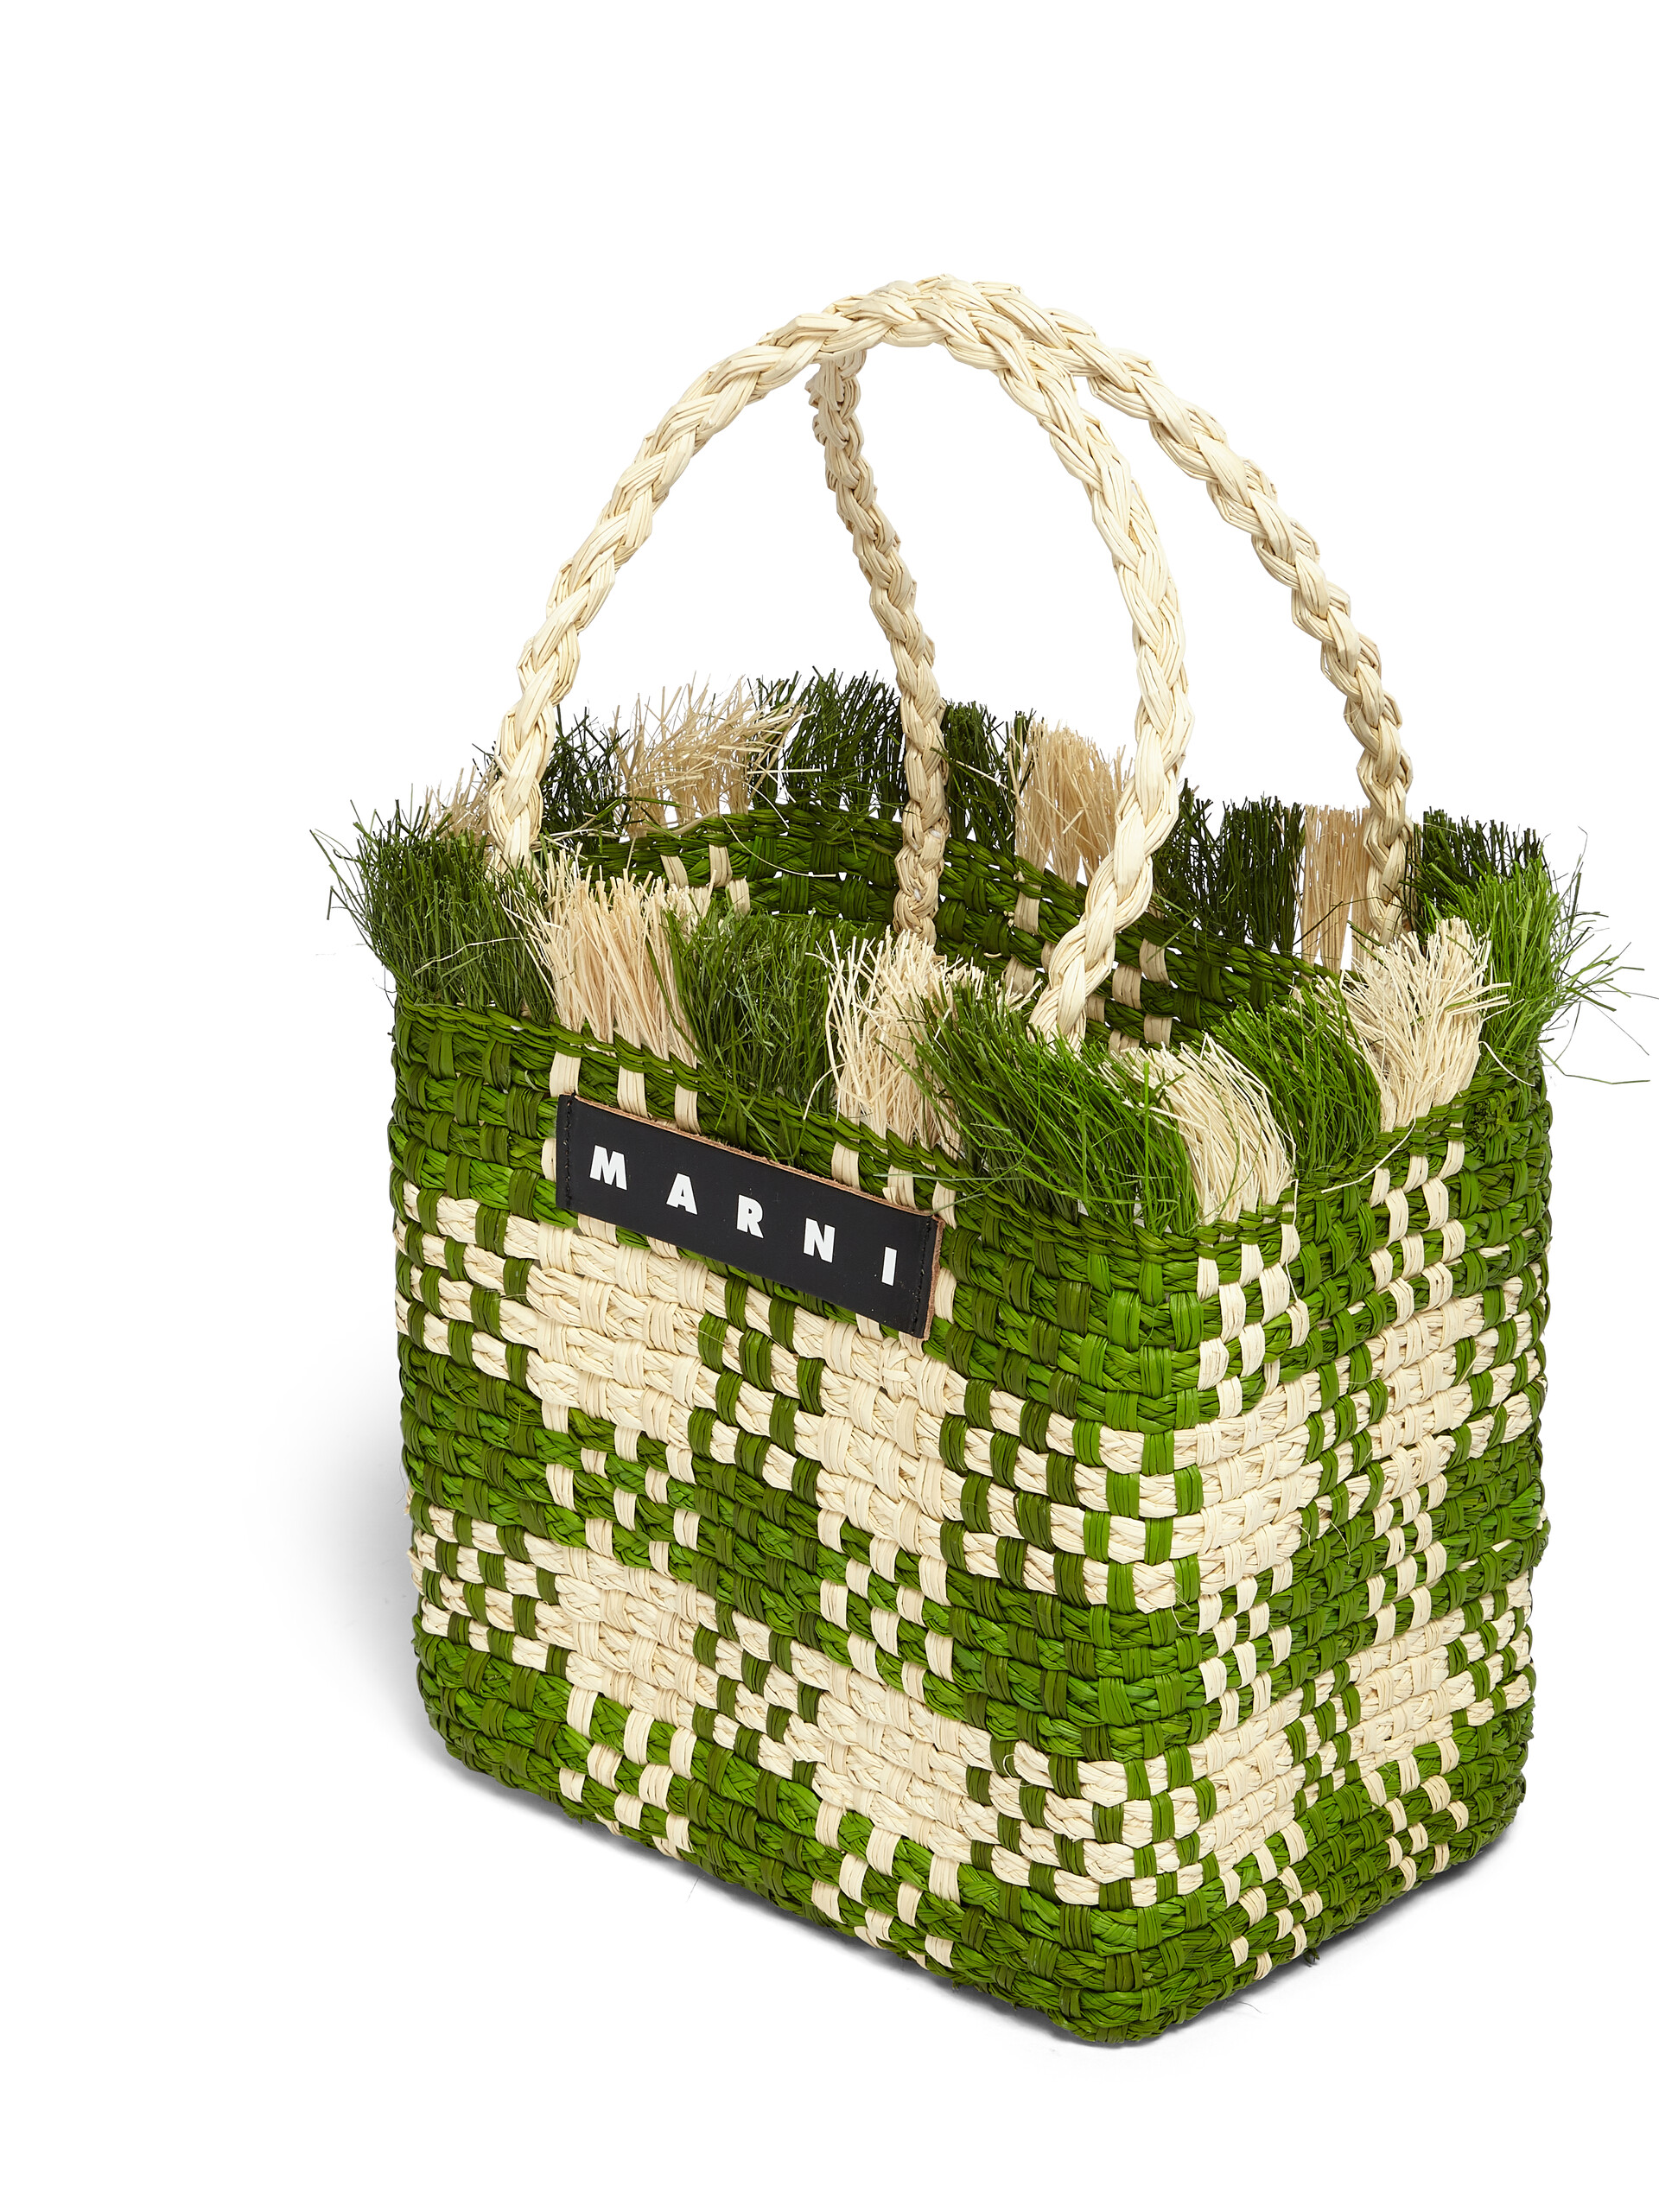 MARNI MARKET SUNSET small bag in green natural fiber - Shopping Bags - Image 4